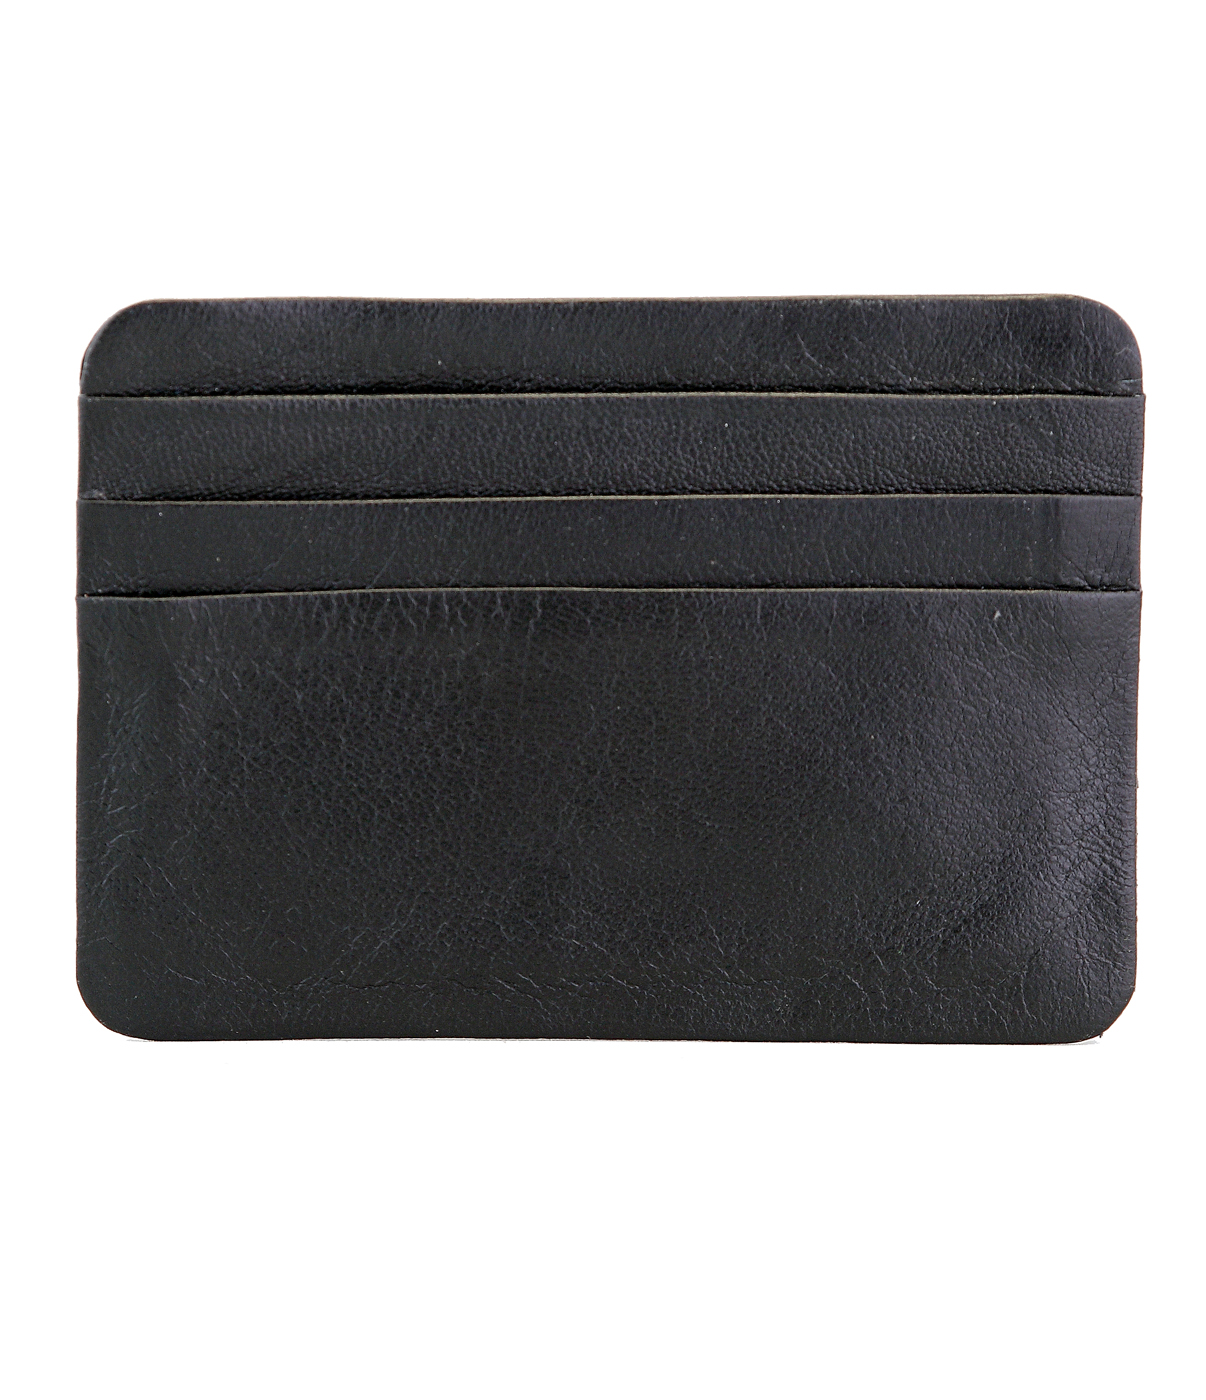 VW8--Ultra Slim card Case in Genuine Leather - Black